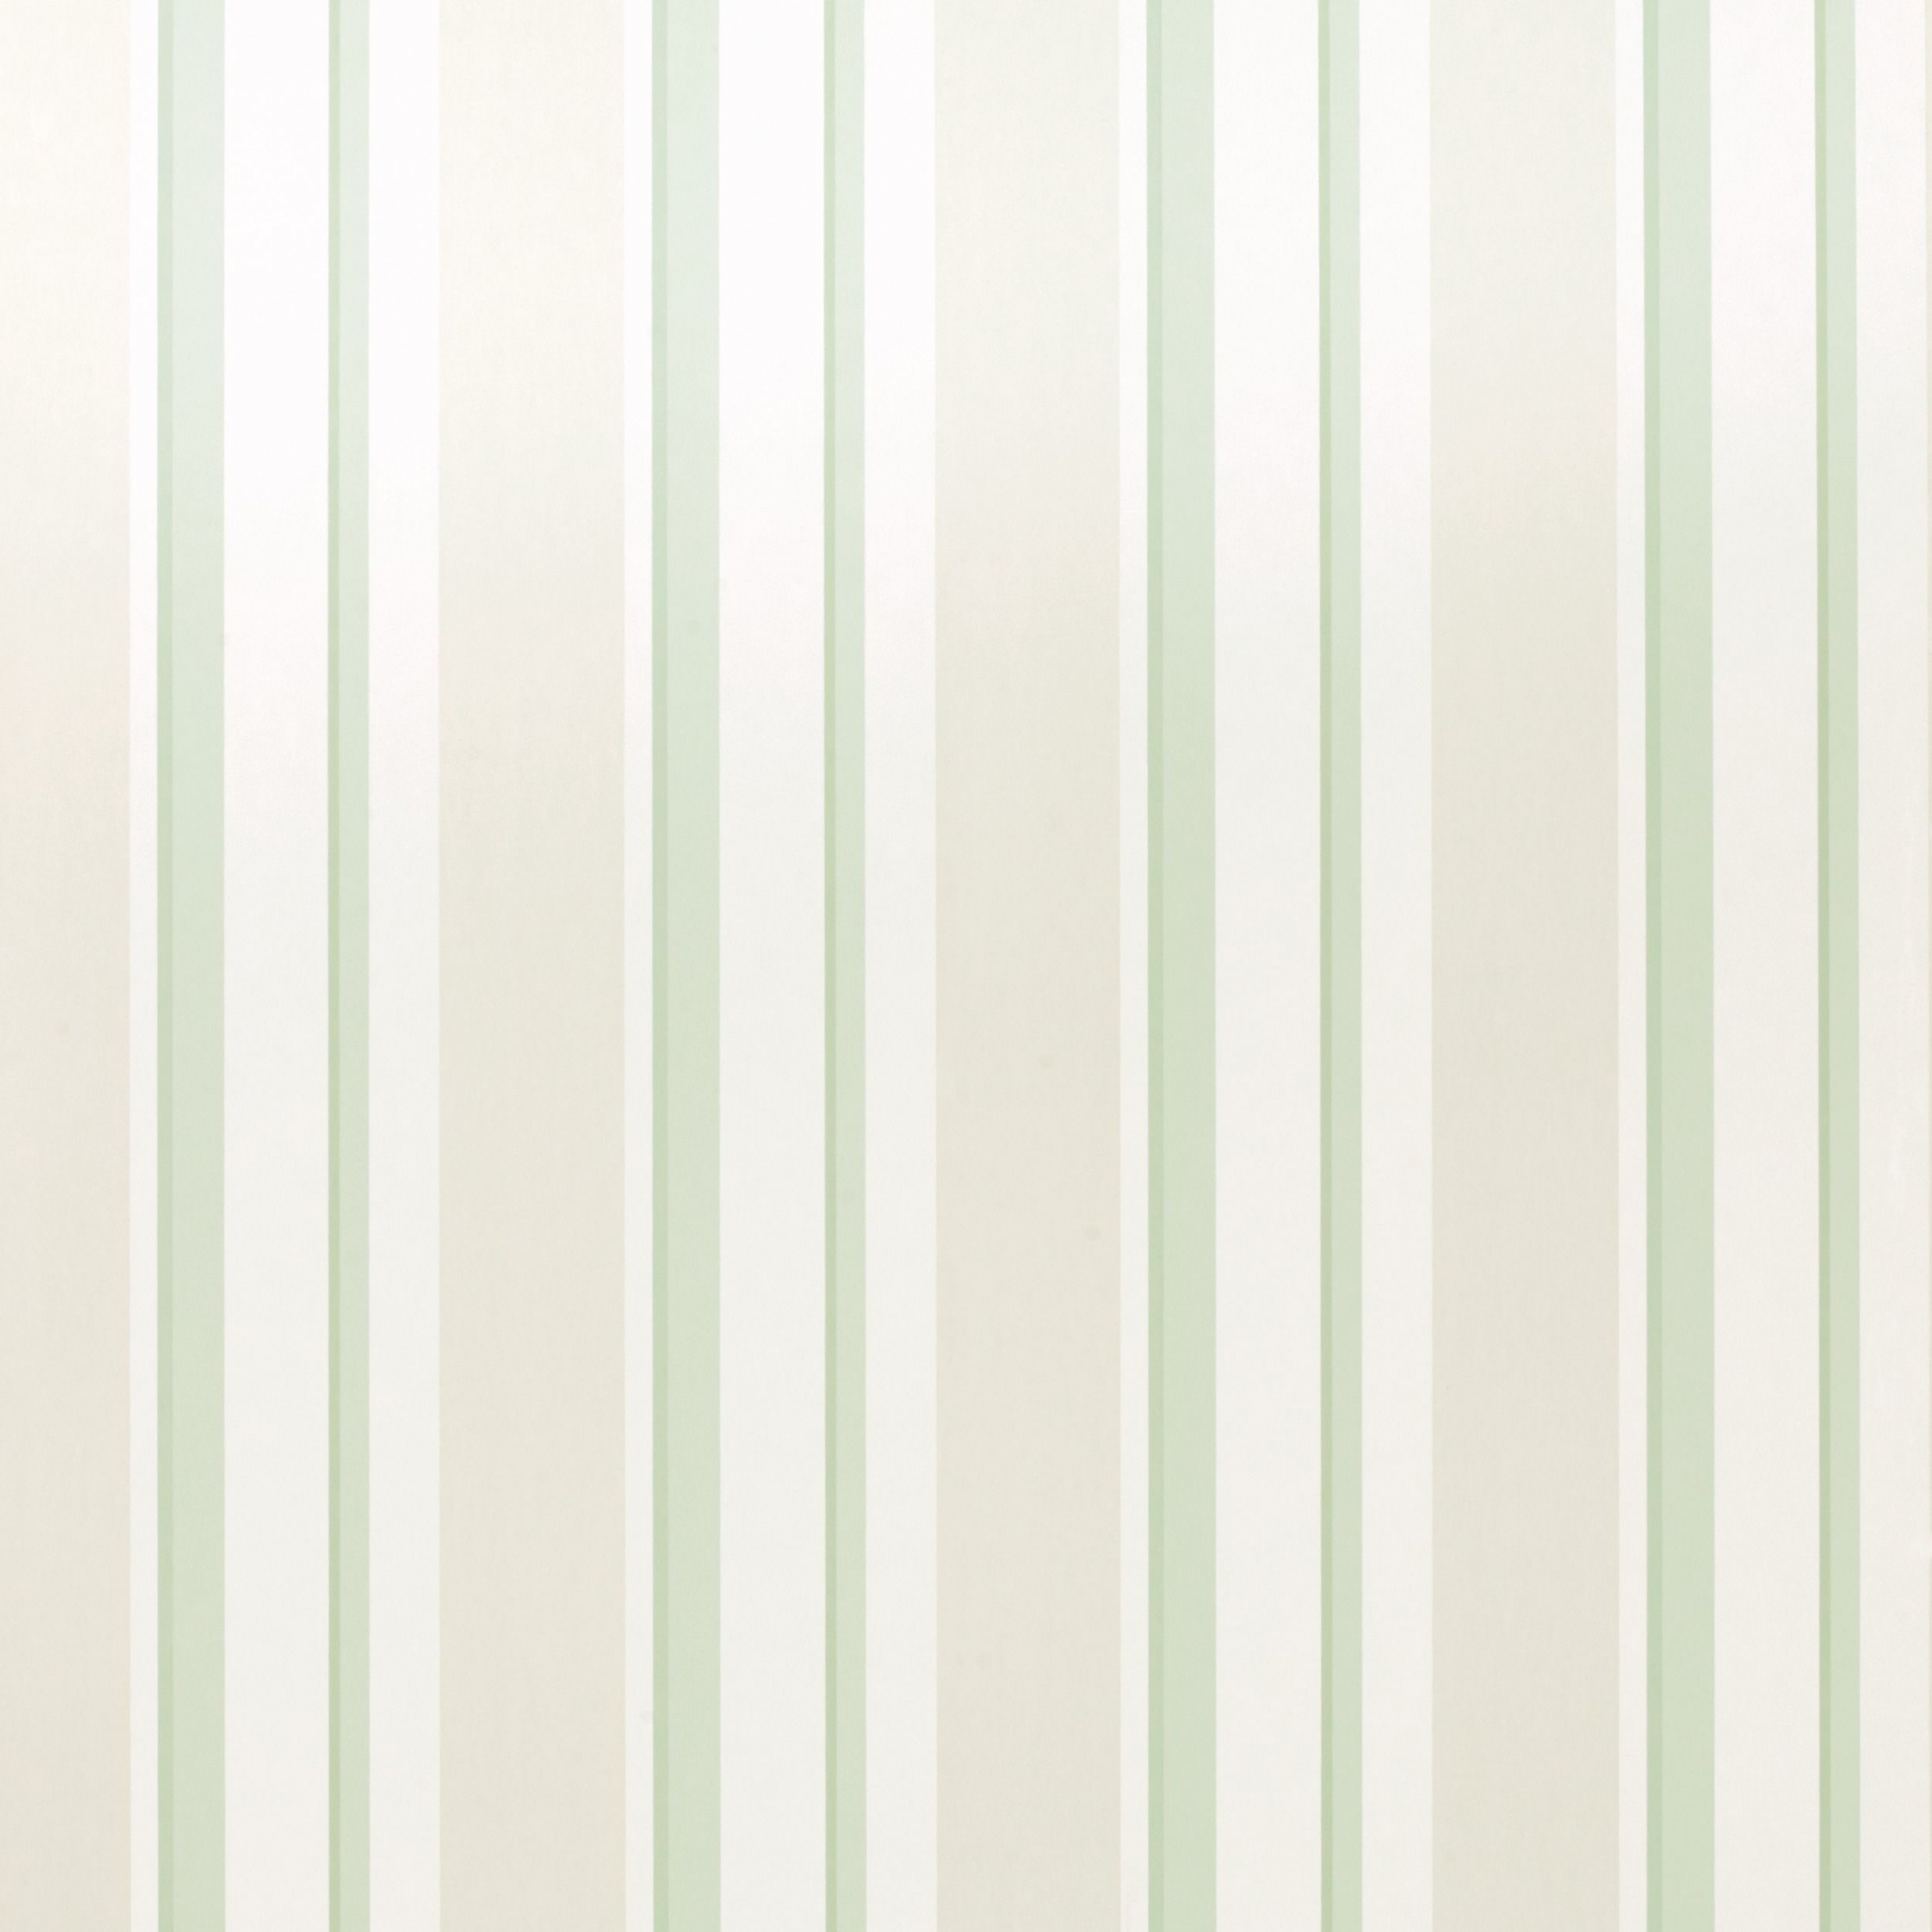 rose gold wallpaper,green,line,pattern,wallpaper,curtain